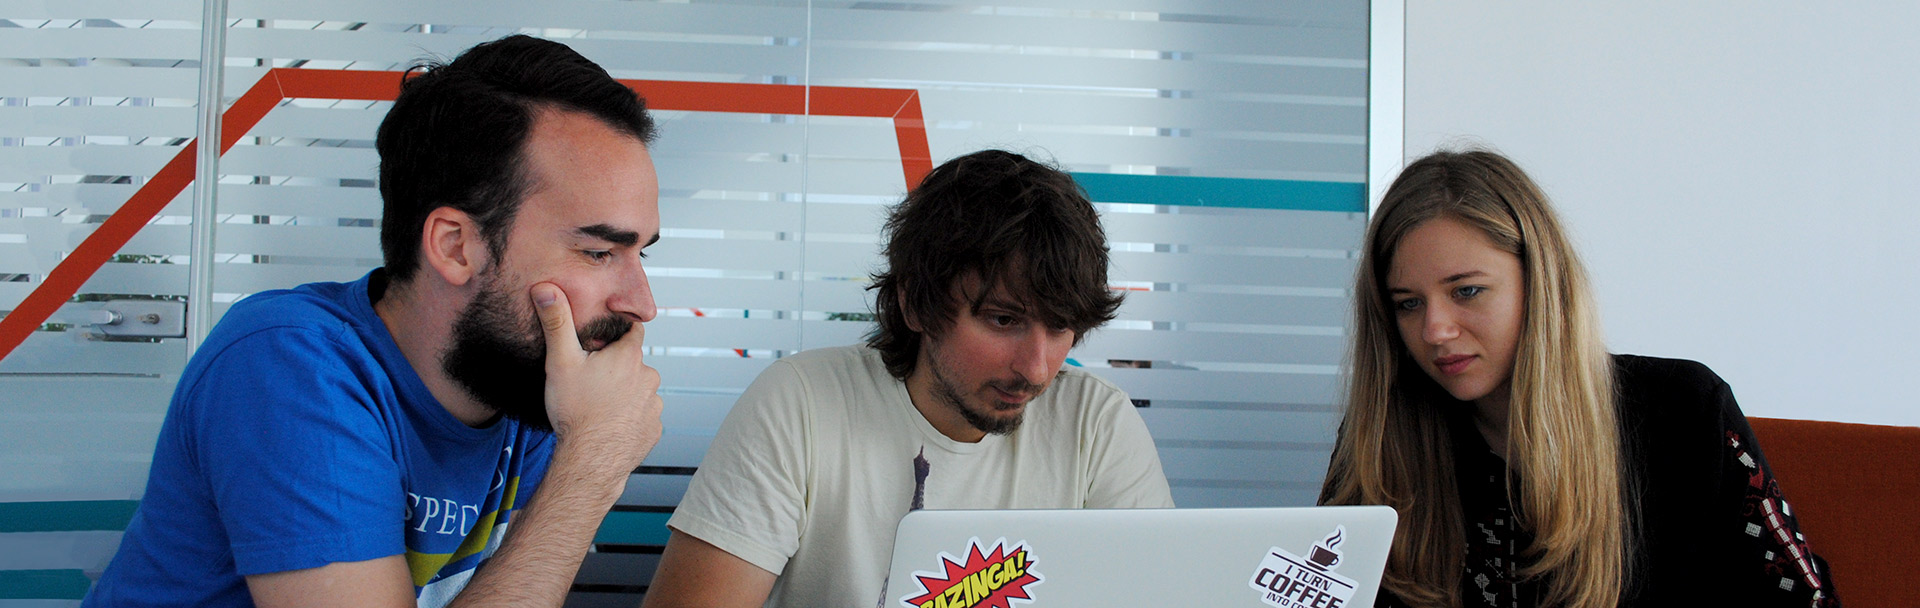 How I work: Serban, iOS developer